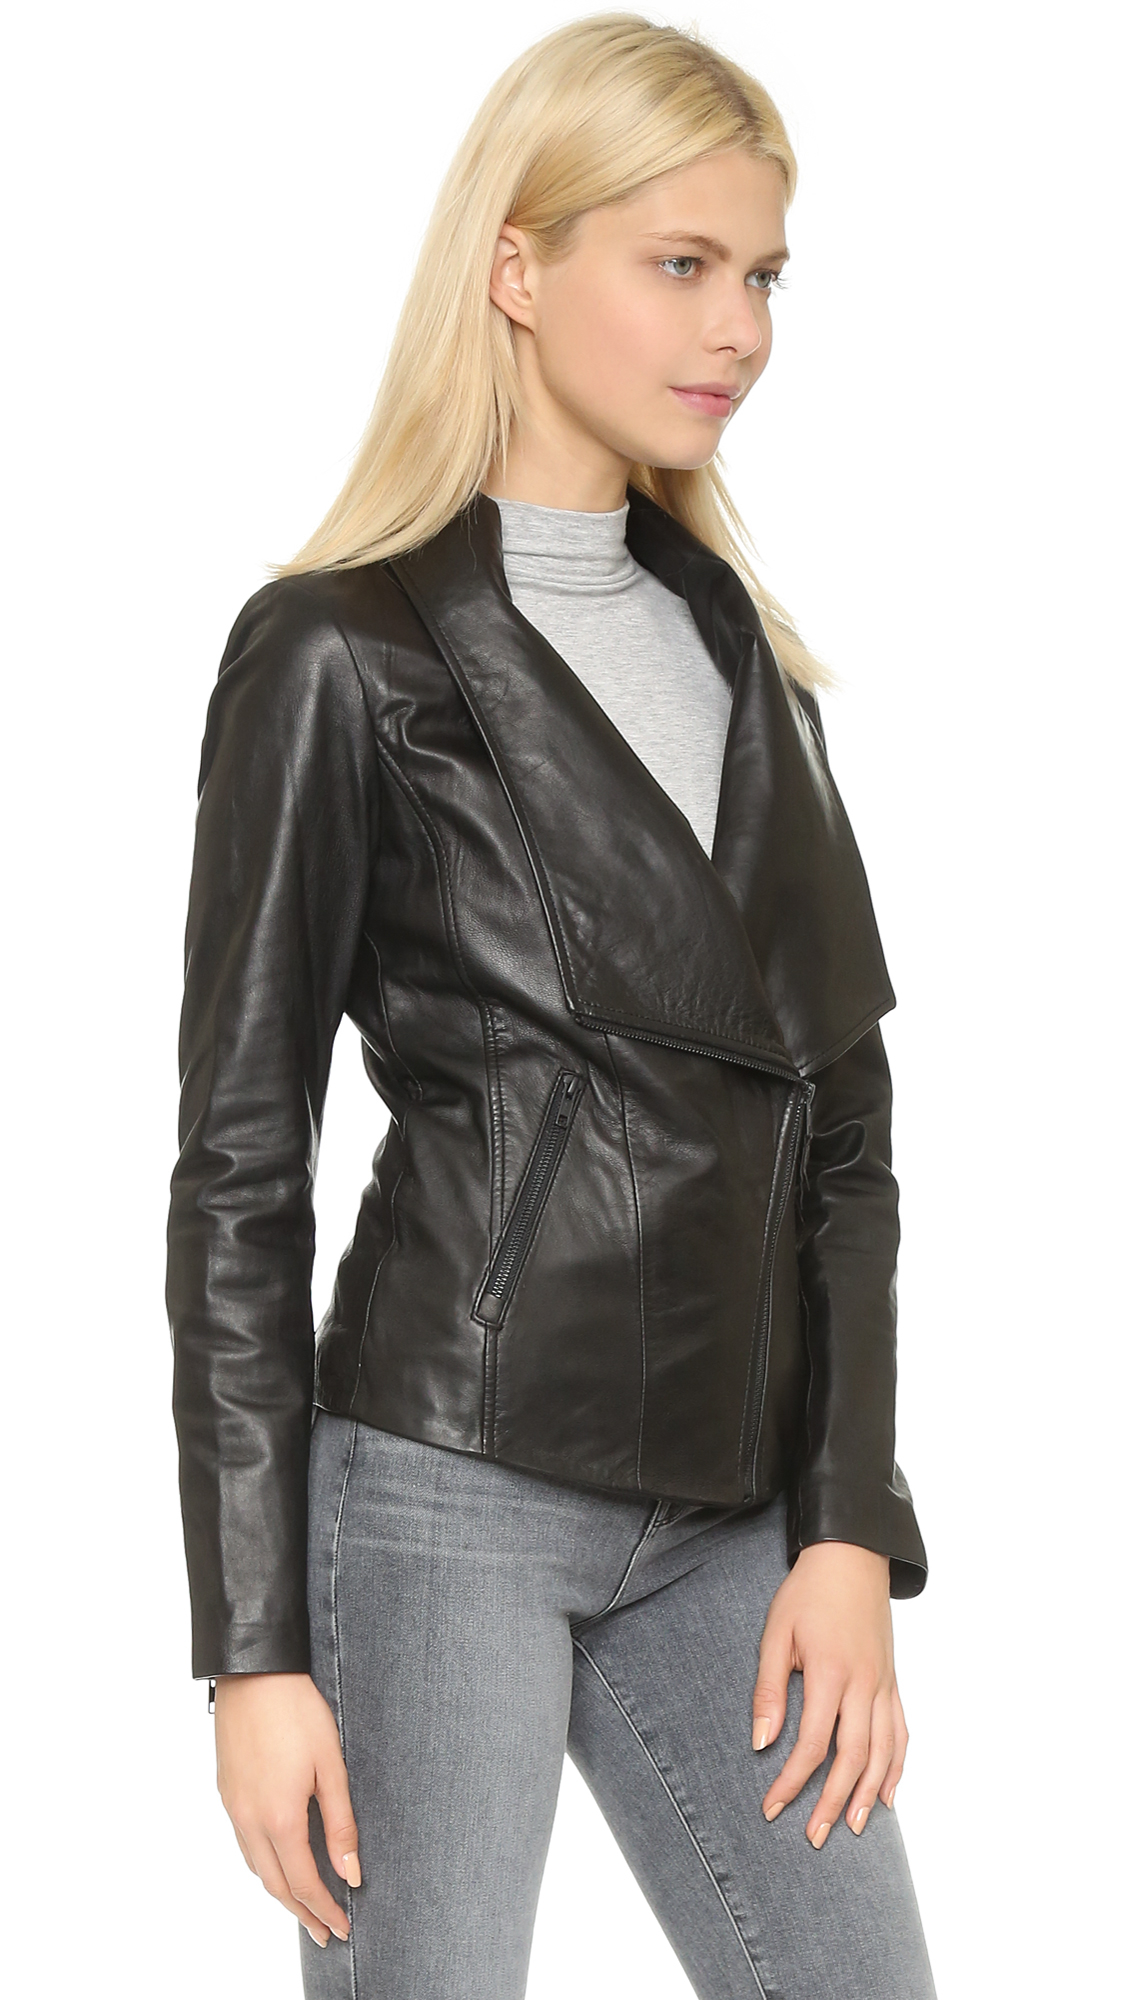 Soia & kyo Nerissa Leather Jacket - Camel in Black | Lyst